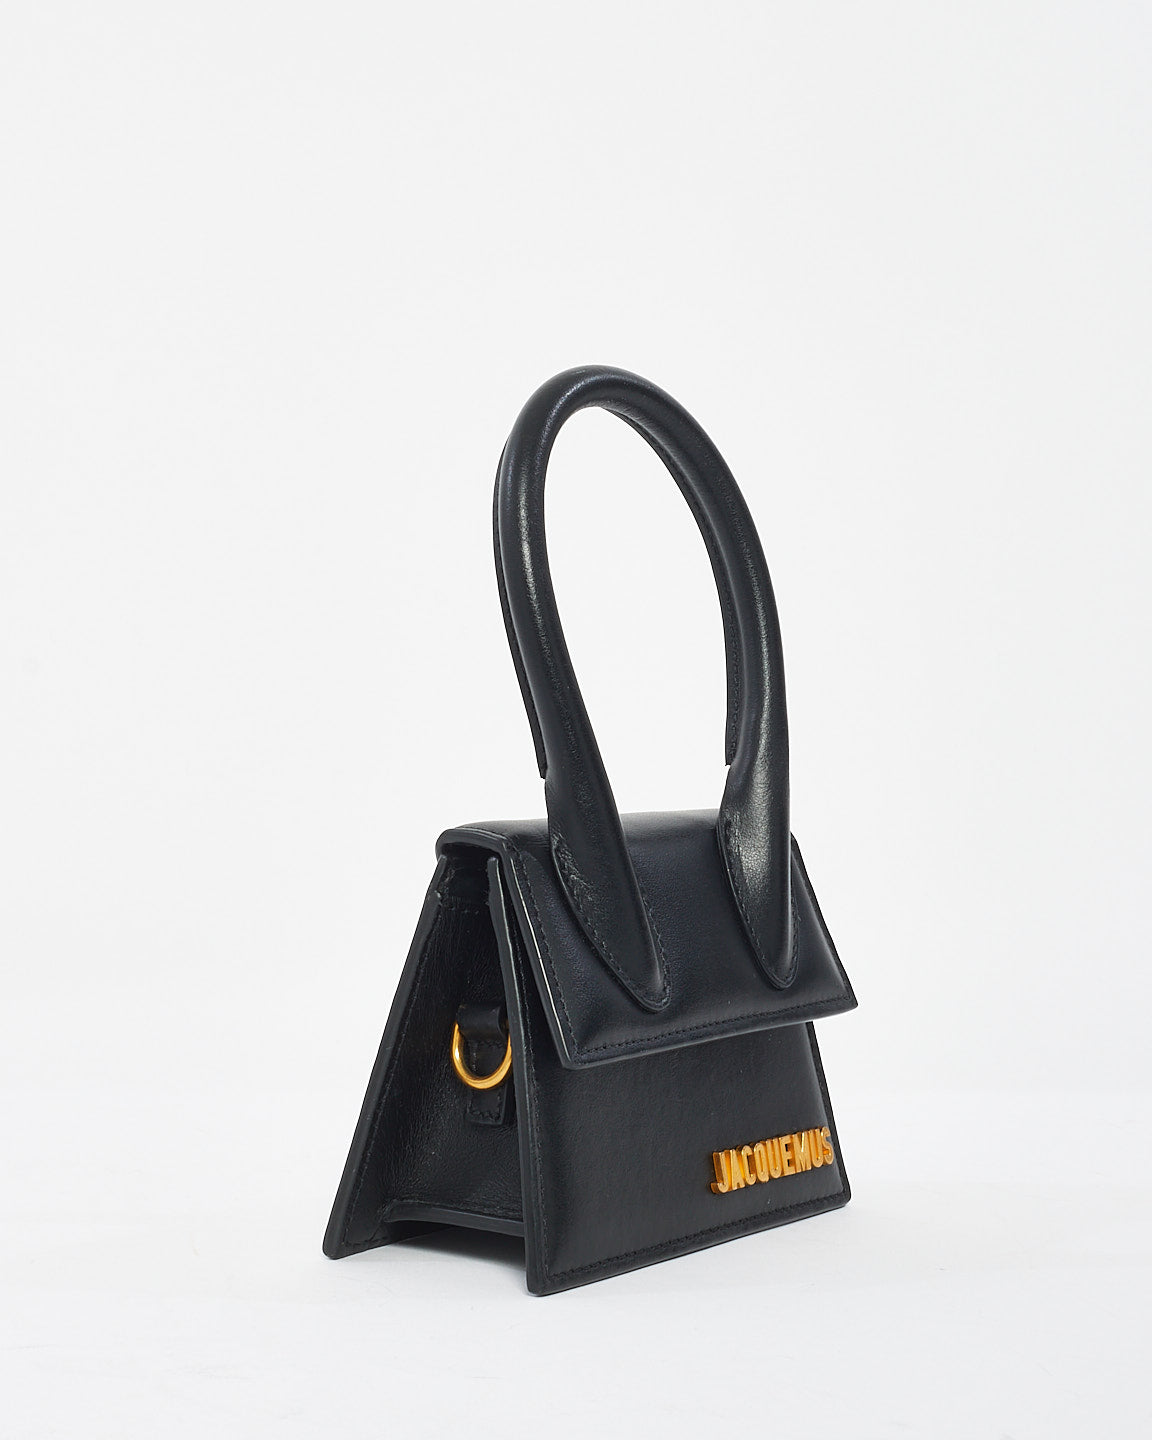 Jacquemus Black Leather Mini  'Le Chiquito' Bag